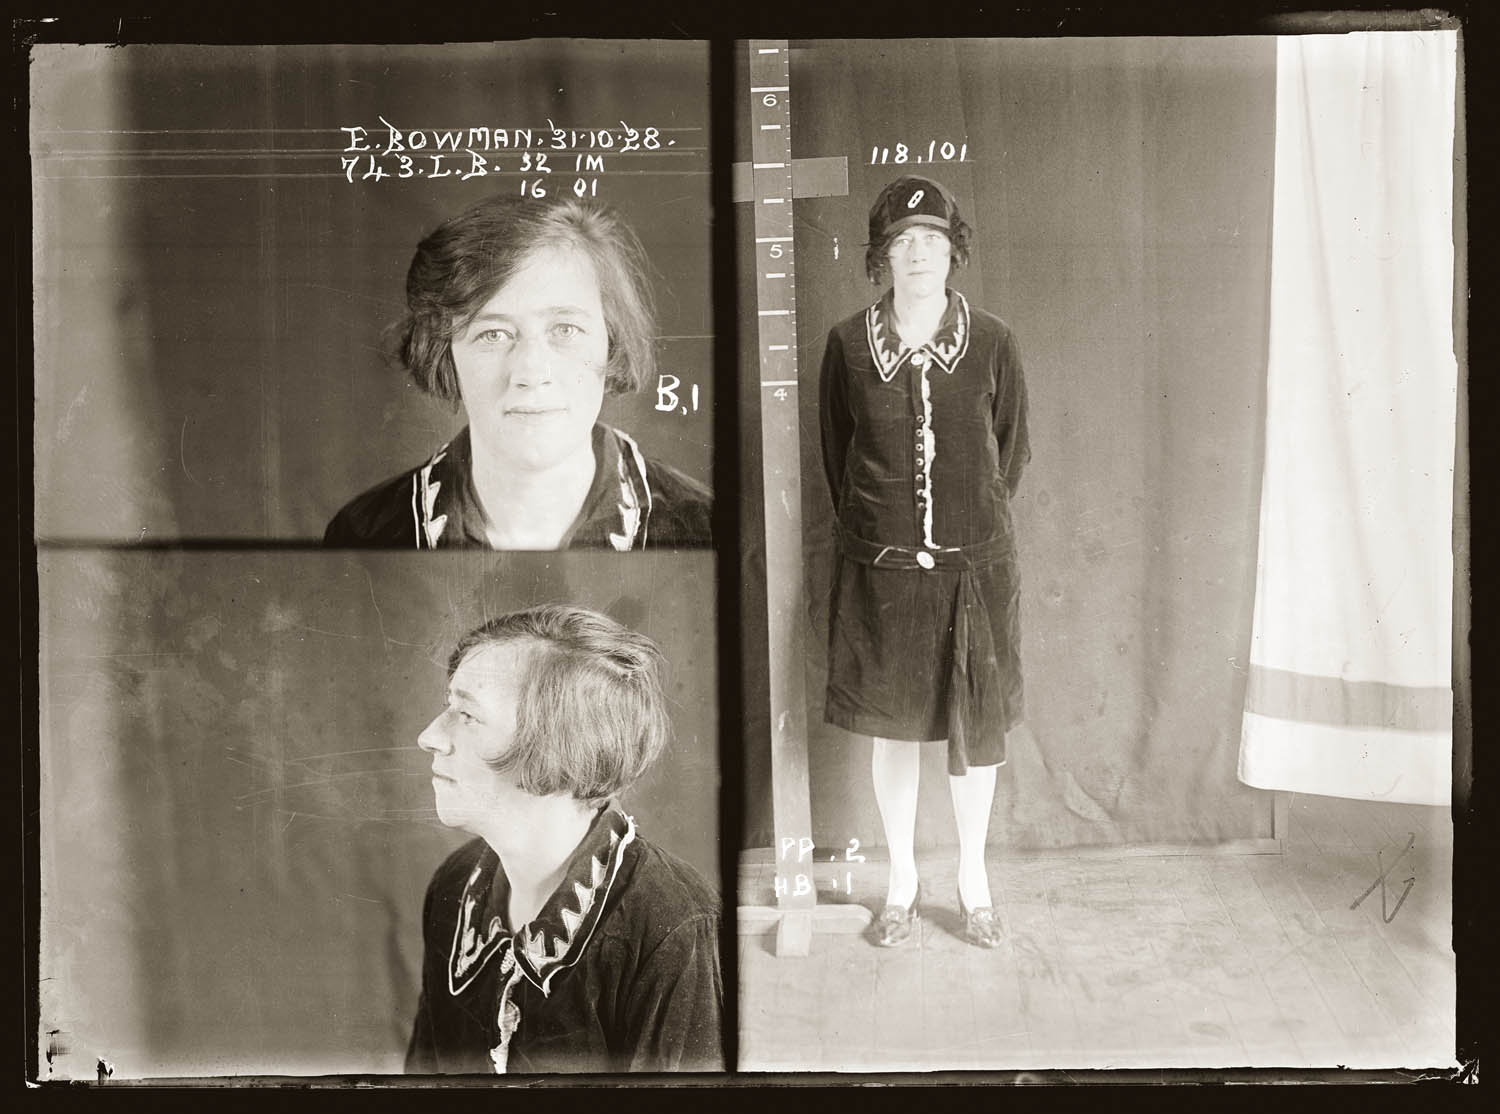 Mug shot of Elsie Bowman taken 31 October 1928, Long Bay Women's Reformatory.